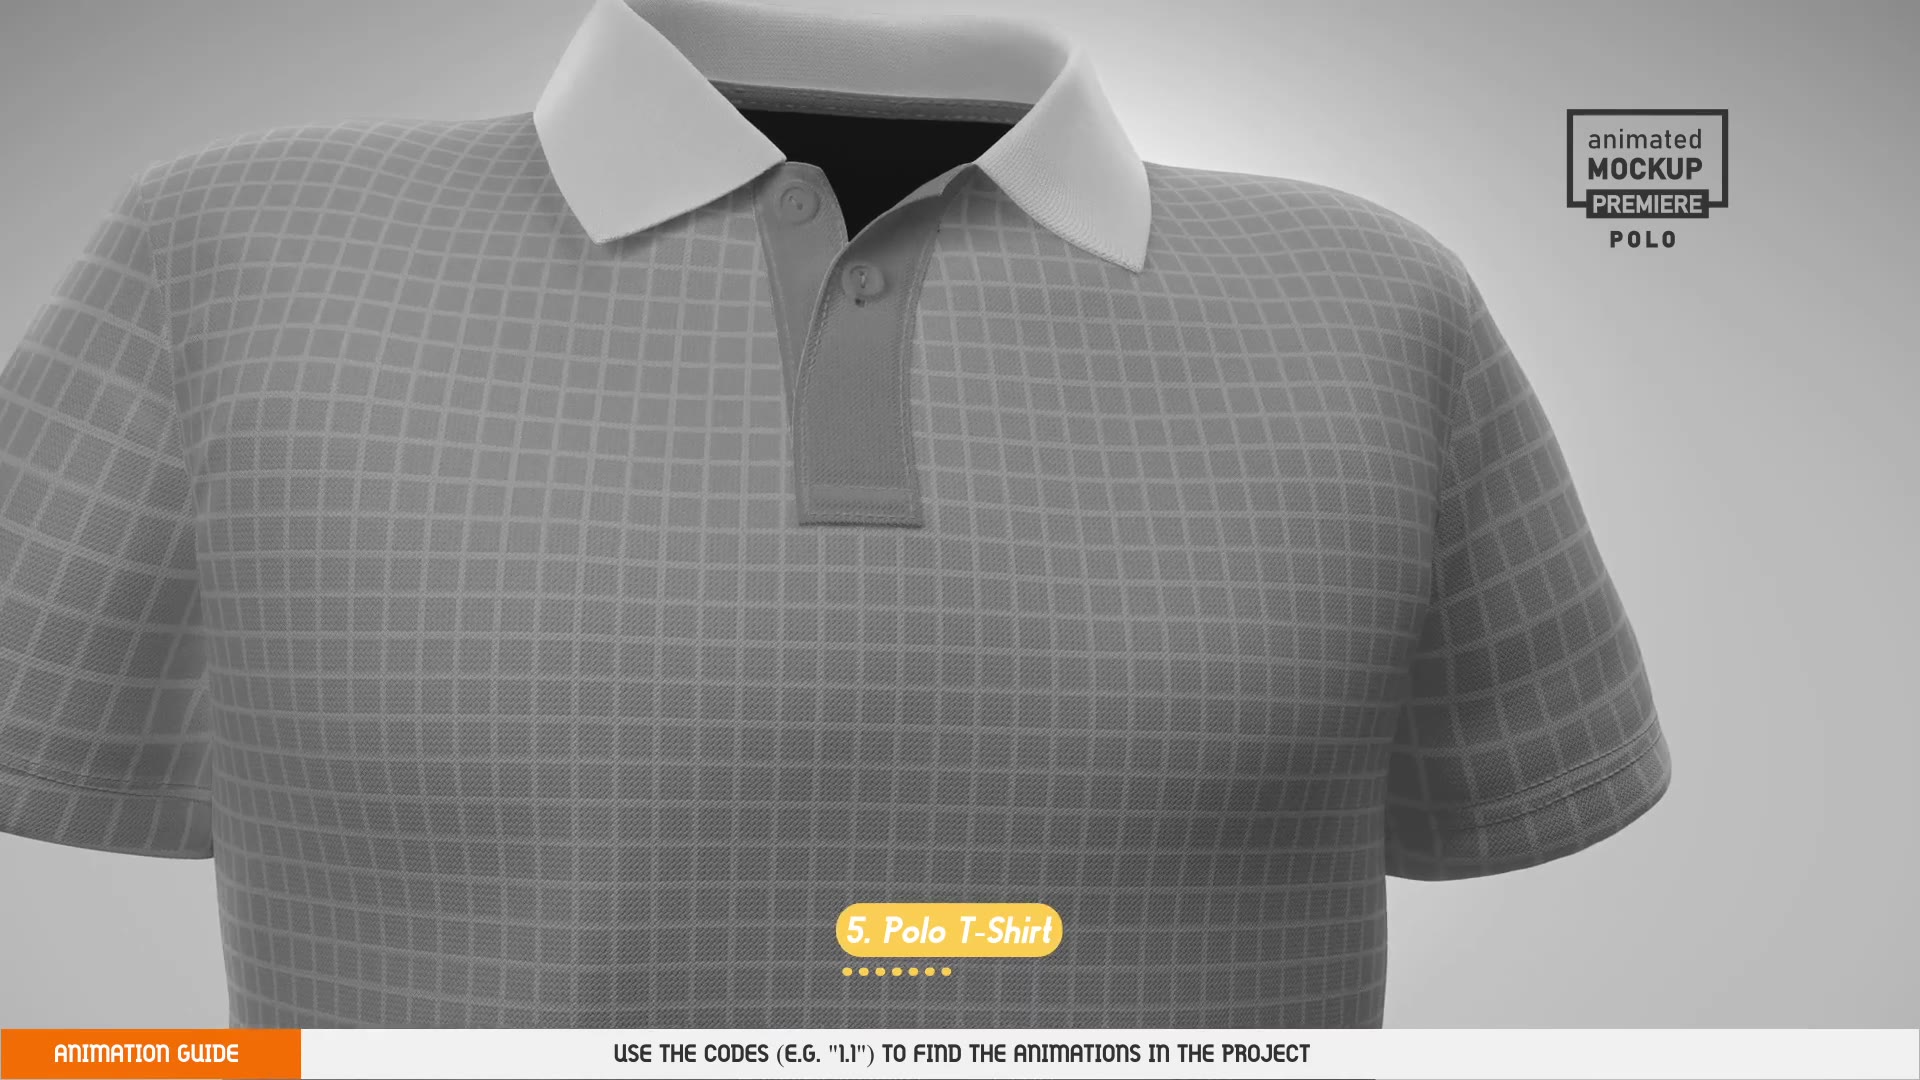 Polo T shirt 5 Scenes Mockup Template Animated Mockup PREMIERE Videohive 33877905 Premiere Pro Image 12